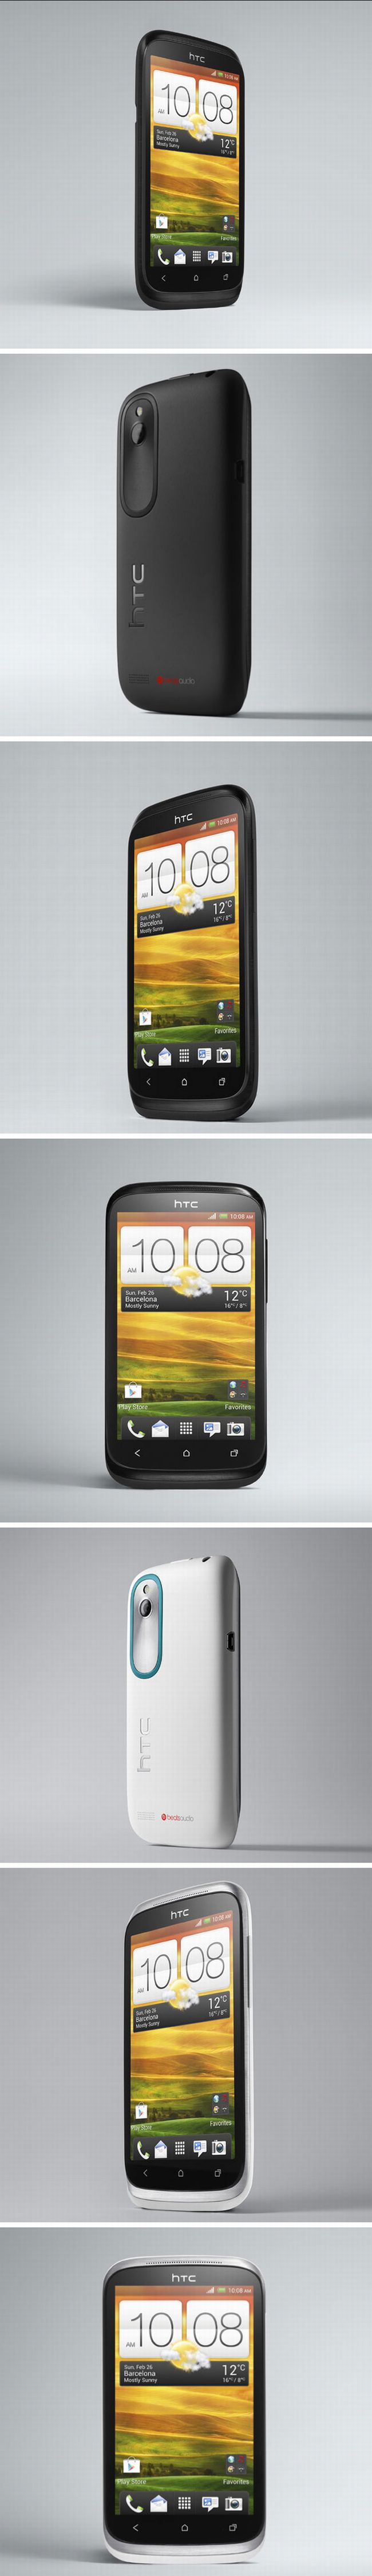 IFA2012 - HTC Desire X: középkategóriában indul